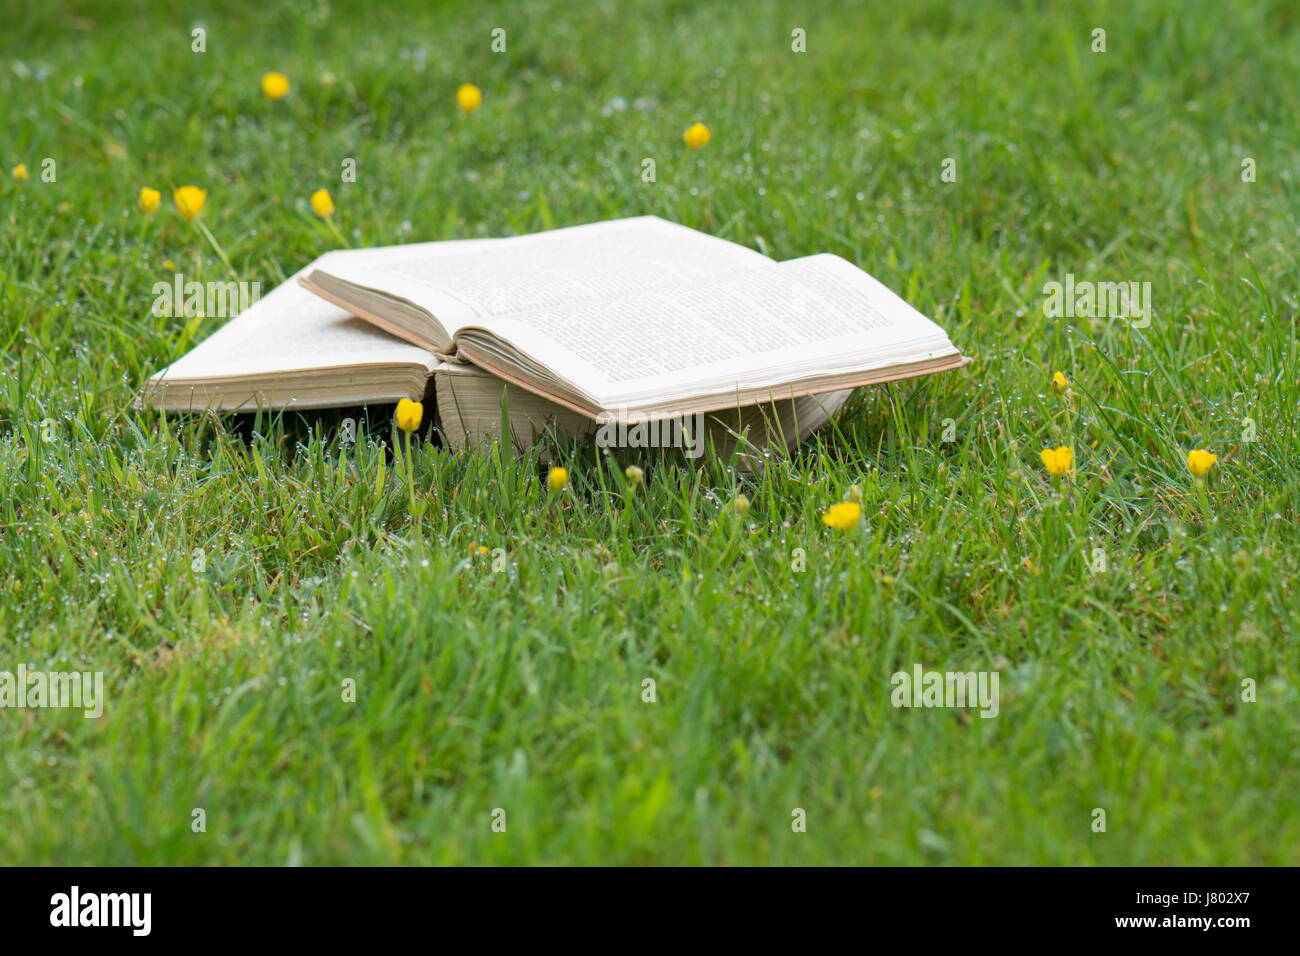 Libros al aire libre sobre el césped Foto de stock